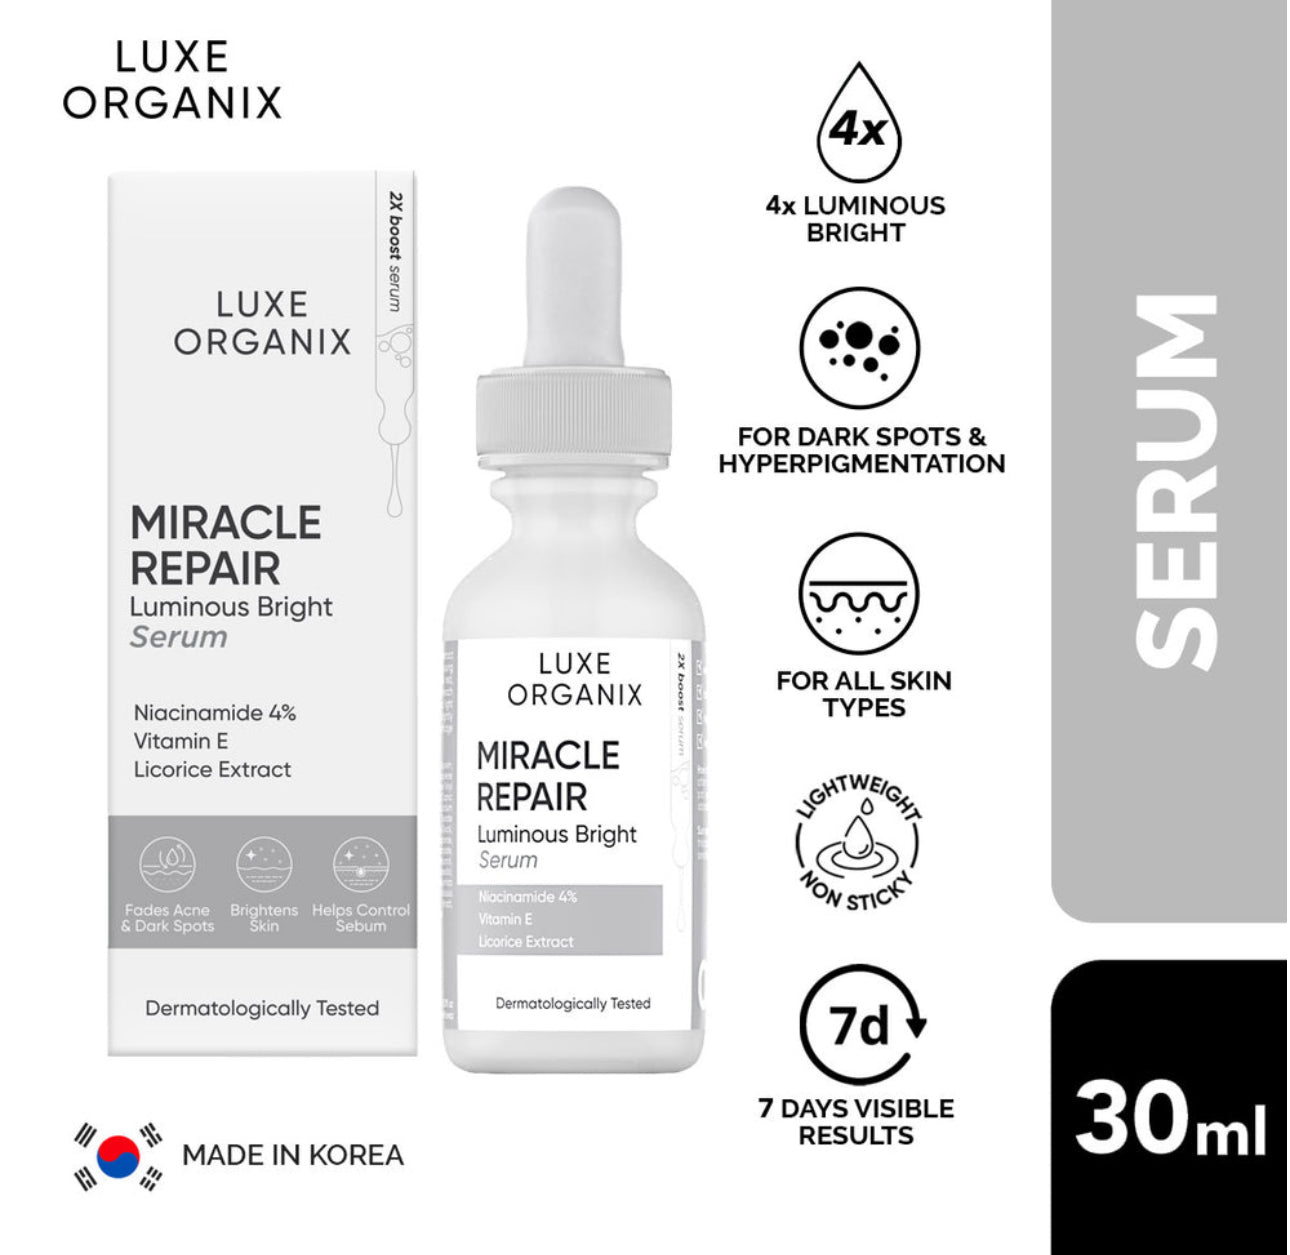 Luxe Organix Mirale Repair Luminous Bright Serum 30ml